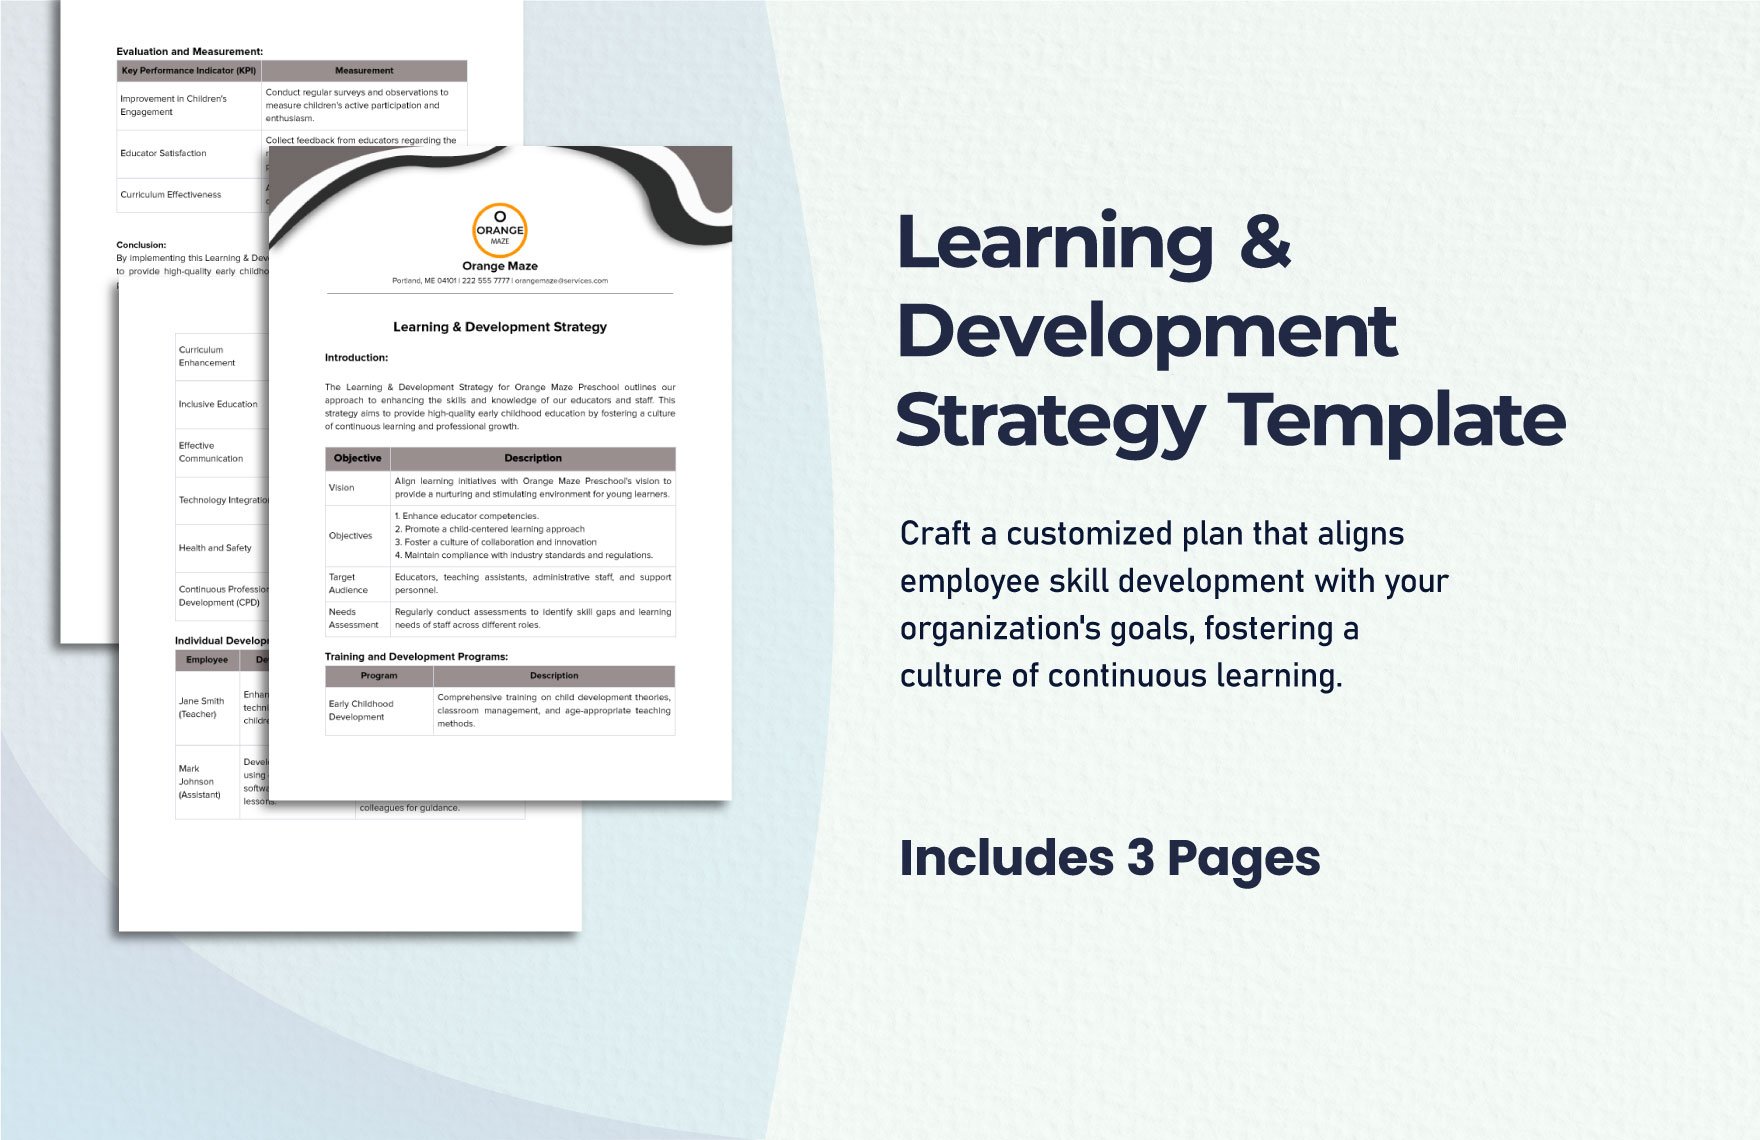 Learning & Development Strategy Template